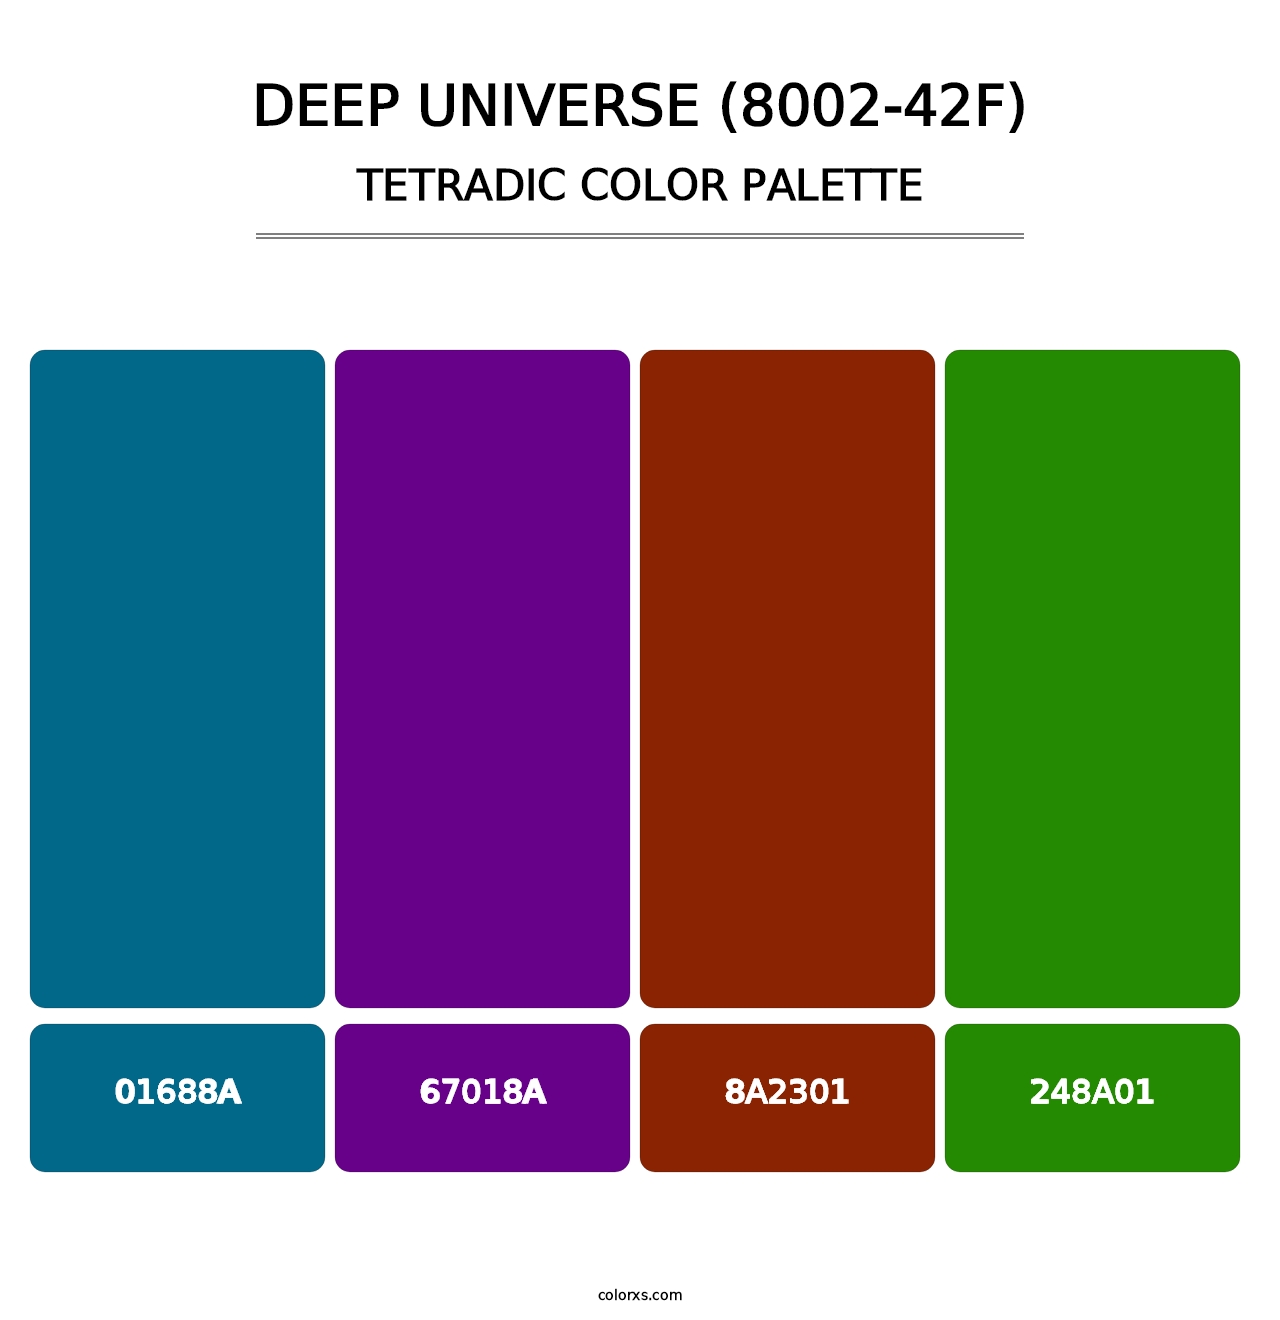 Deep Universe (8002-42F) - Tetradic Color Palette